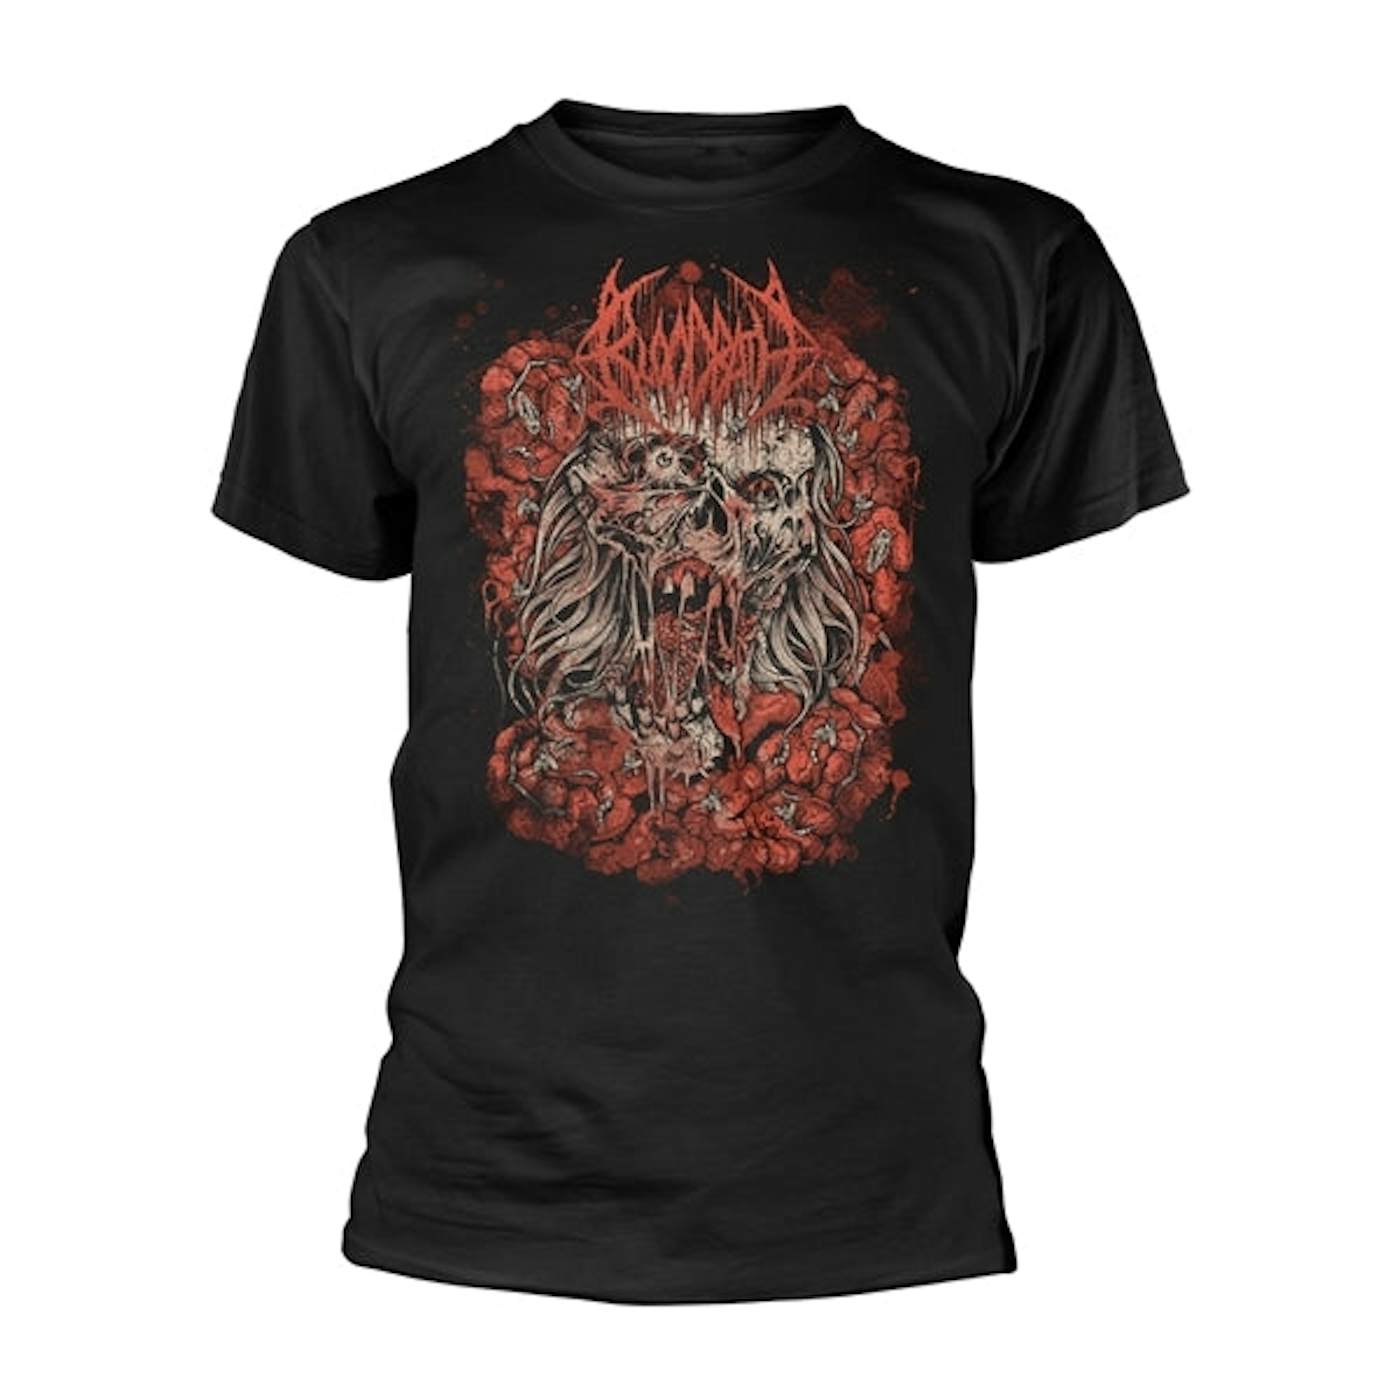 Bloodbath T Shirt - Wretched Human Mirror